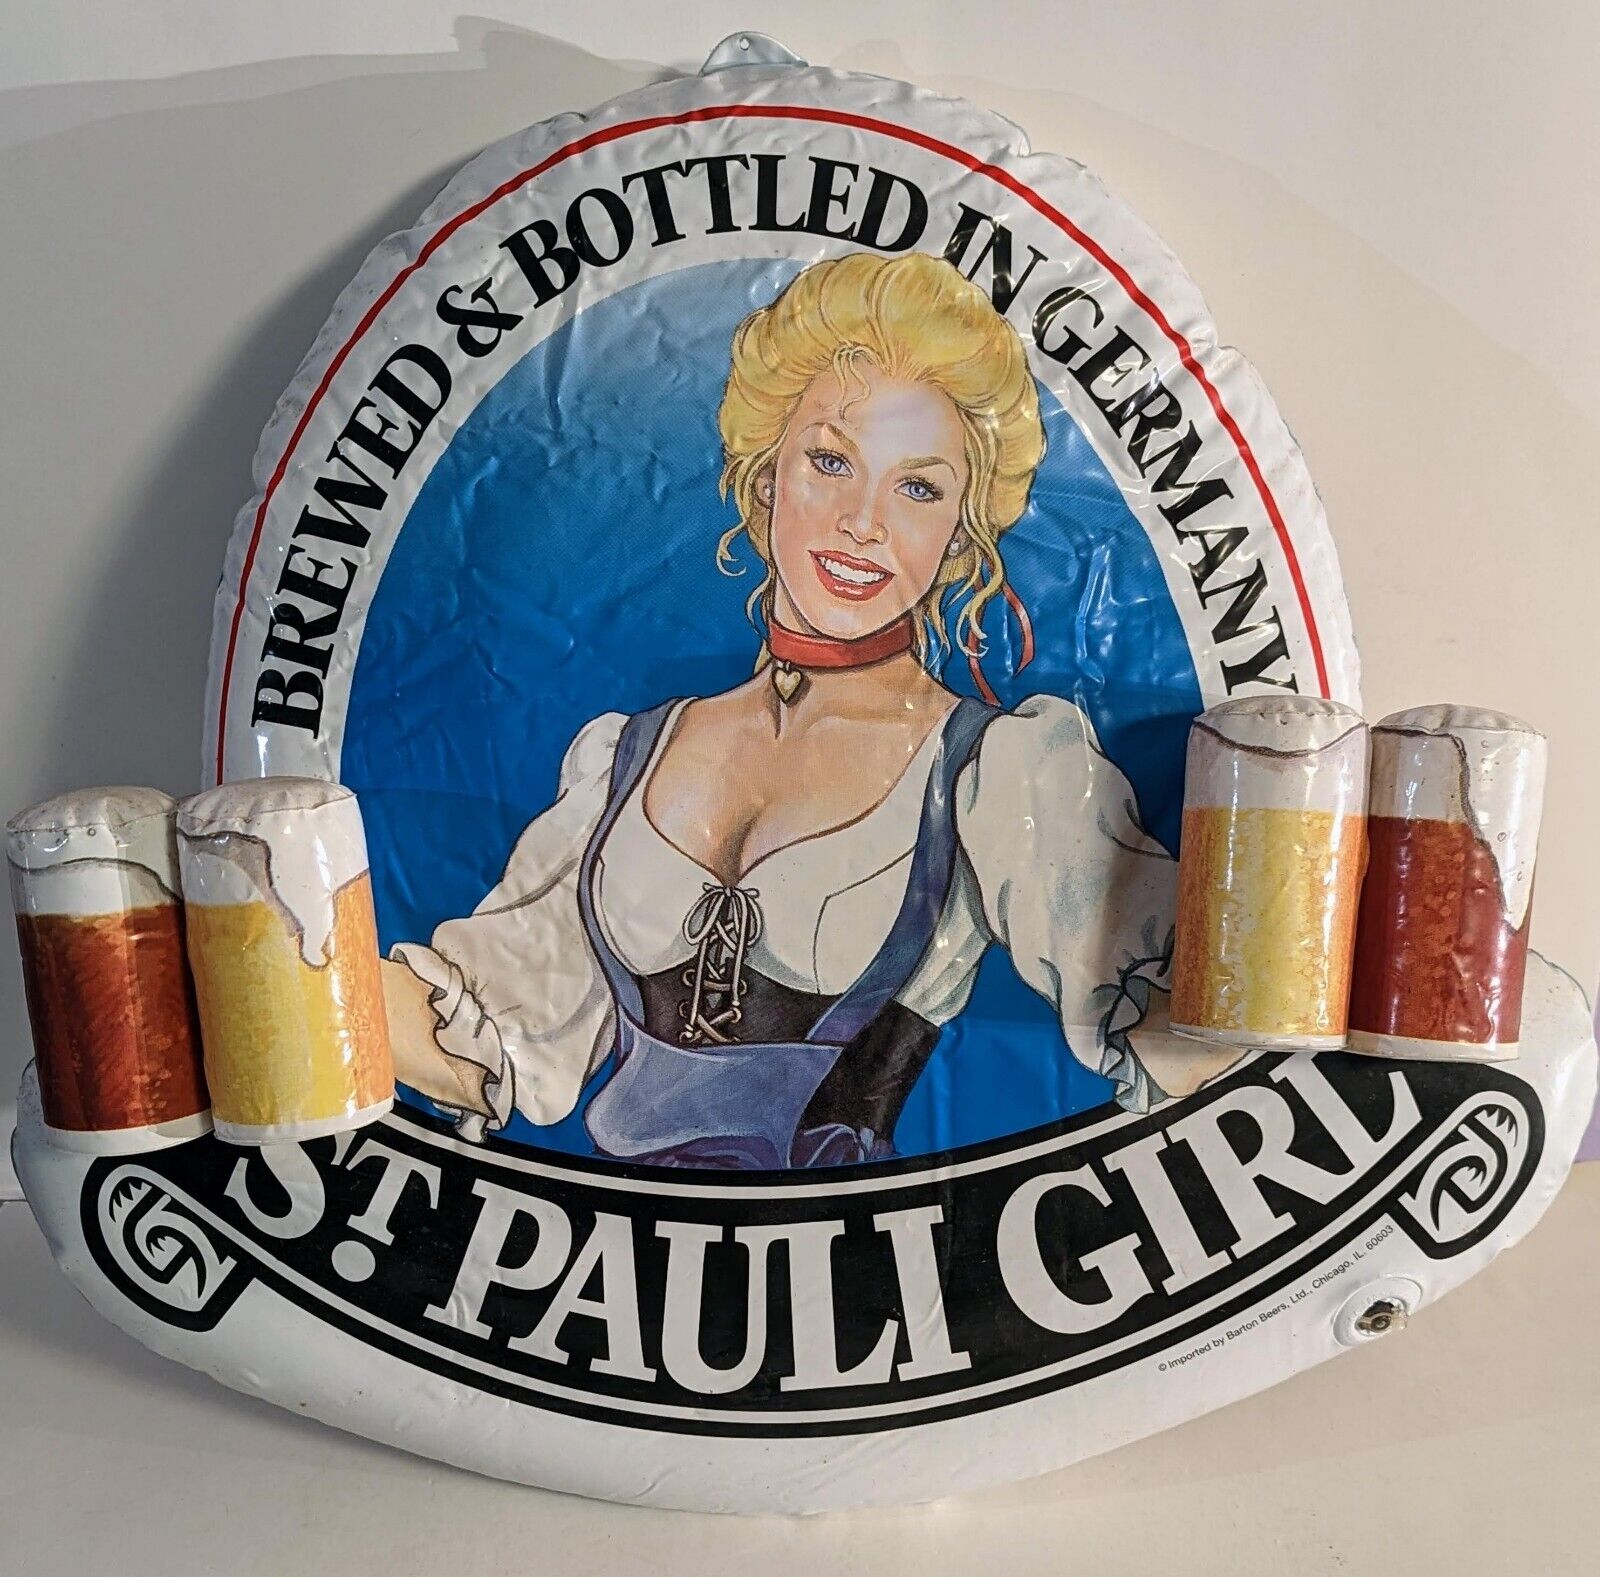 ST. PAULI GIRL BEER MUGS ADVERTISING HANGING INFLATABLE GERMAN 3' X 4' 3D